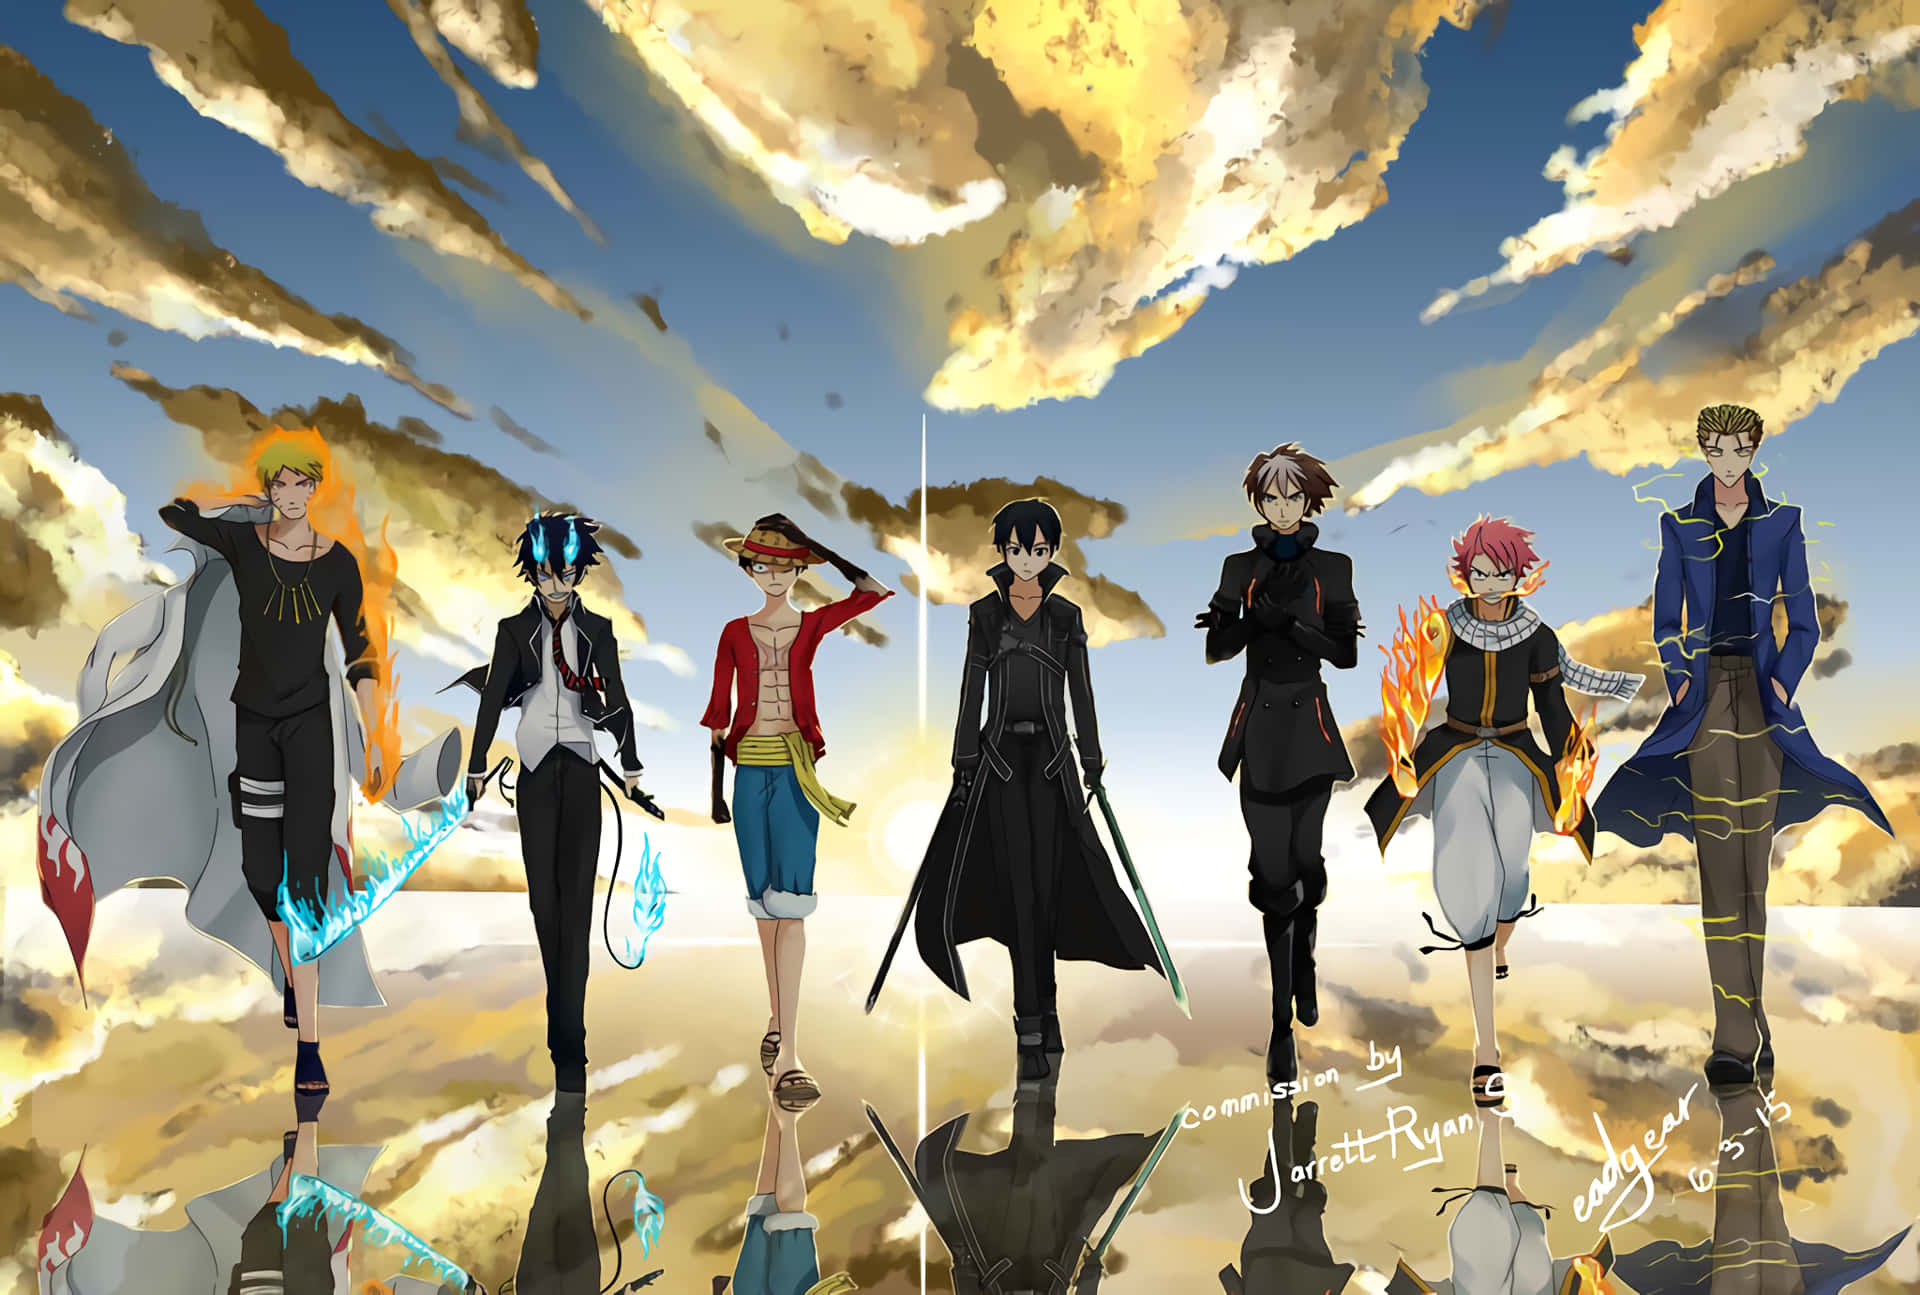 Ungrupo De Personajes De Anime Parados Frente A Un Cielo Nublado Fondo de pantalla